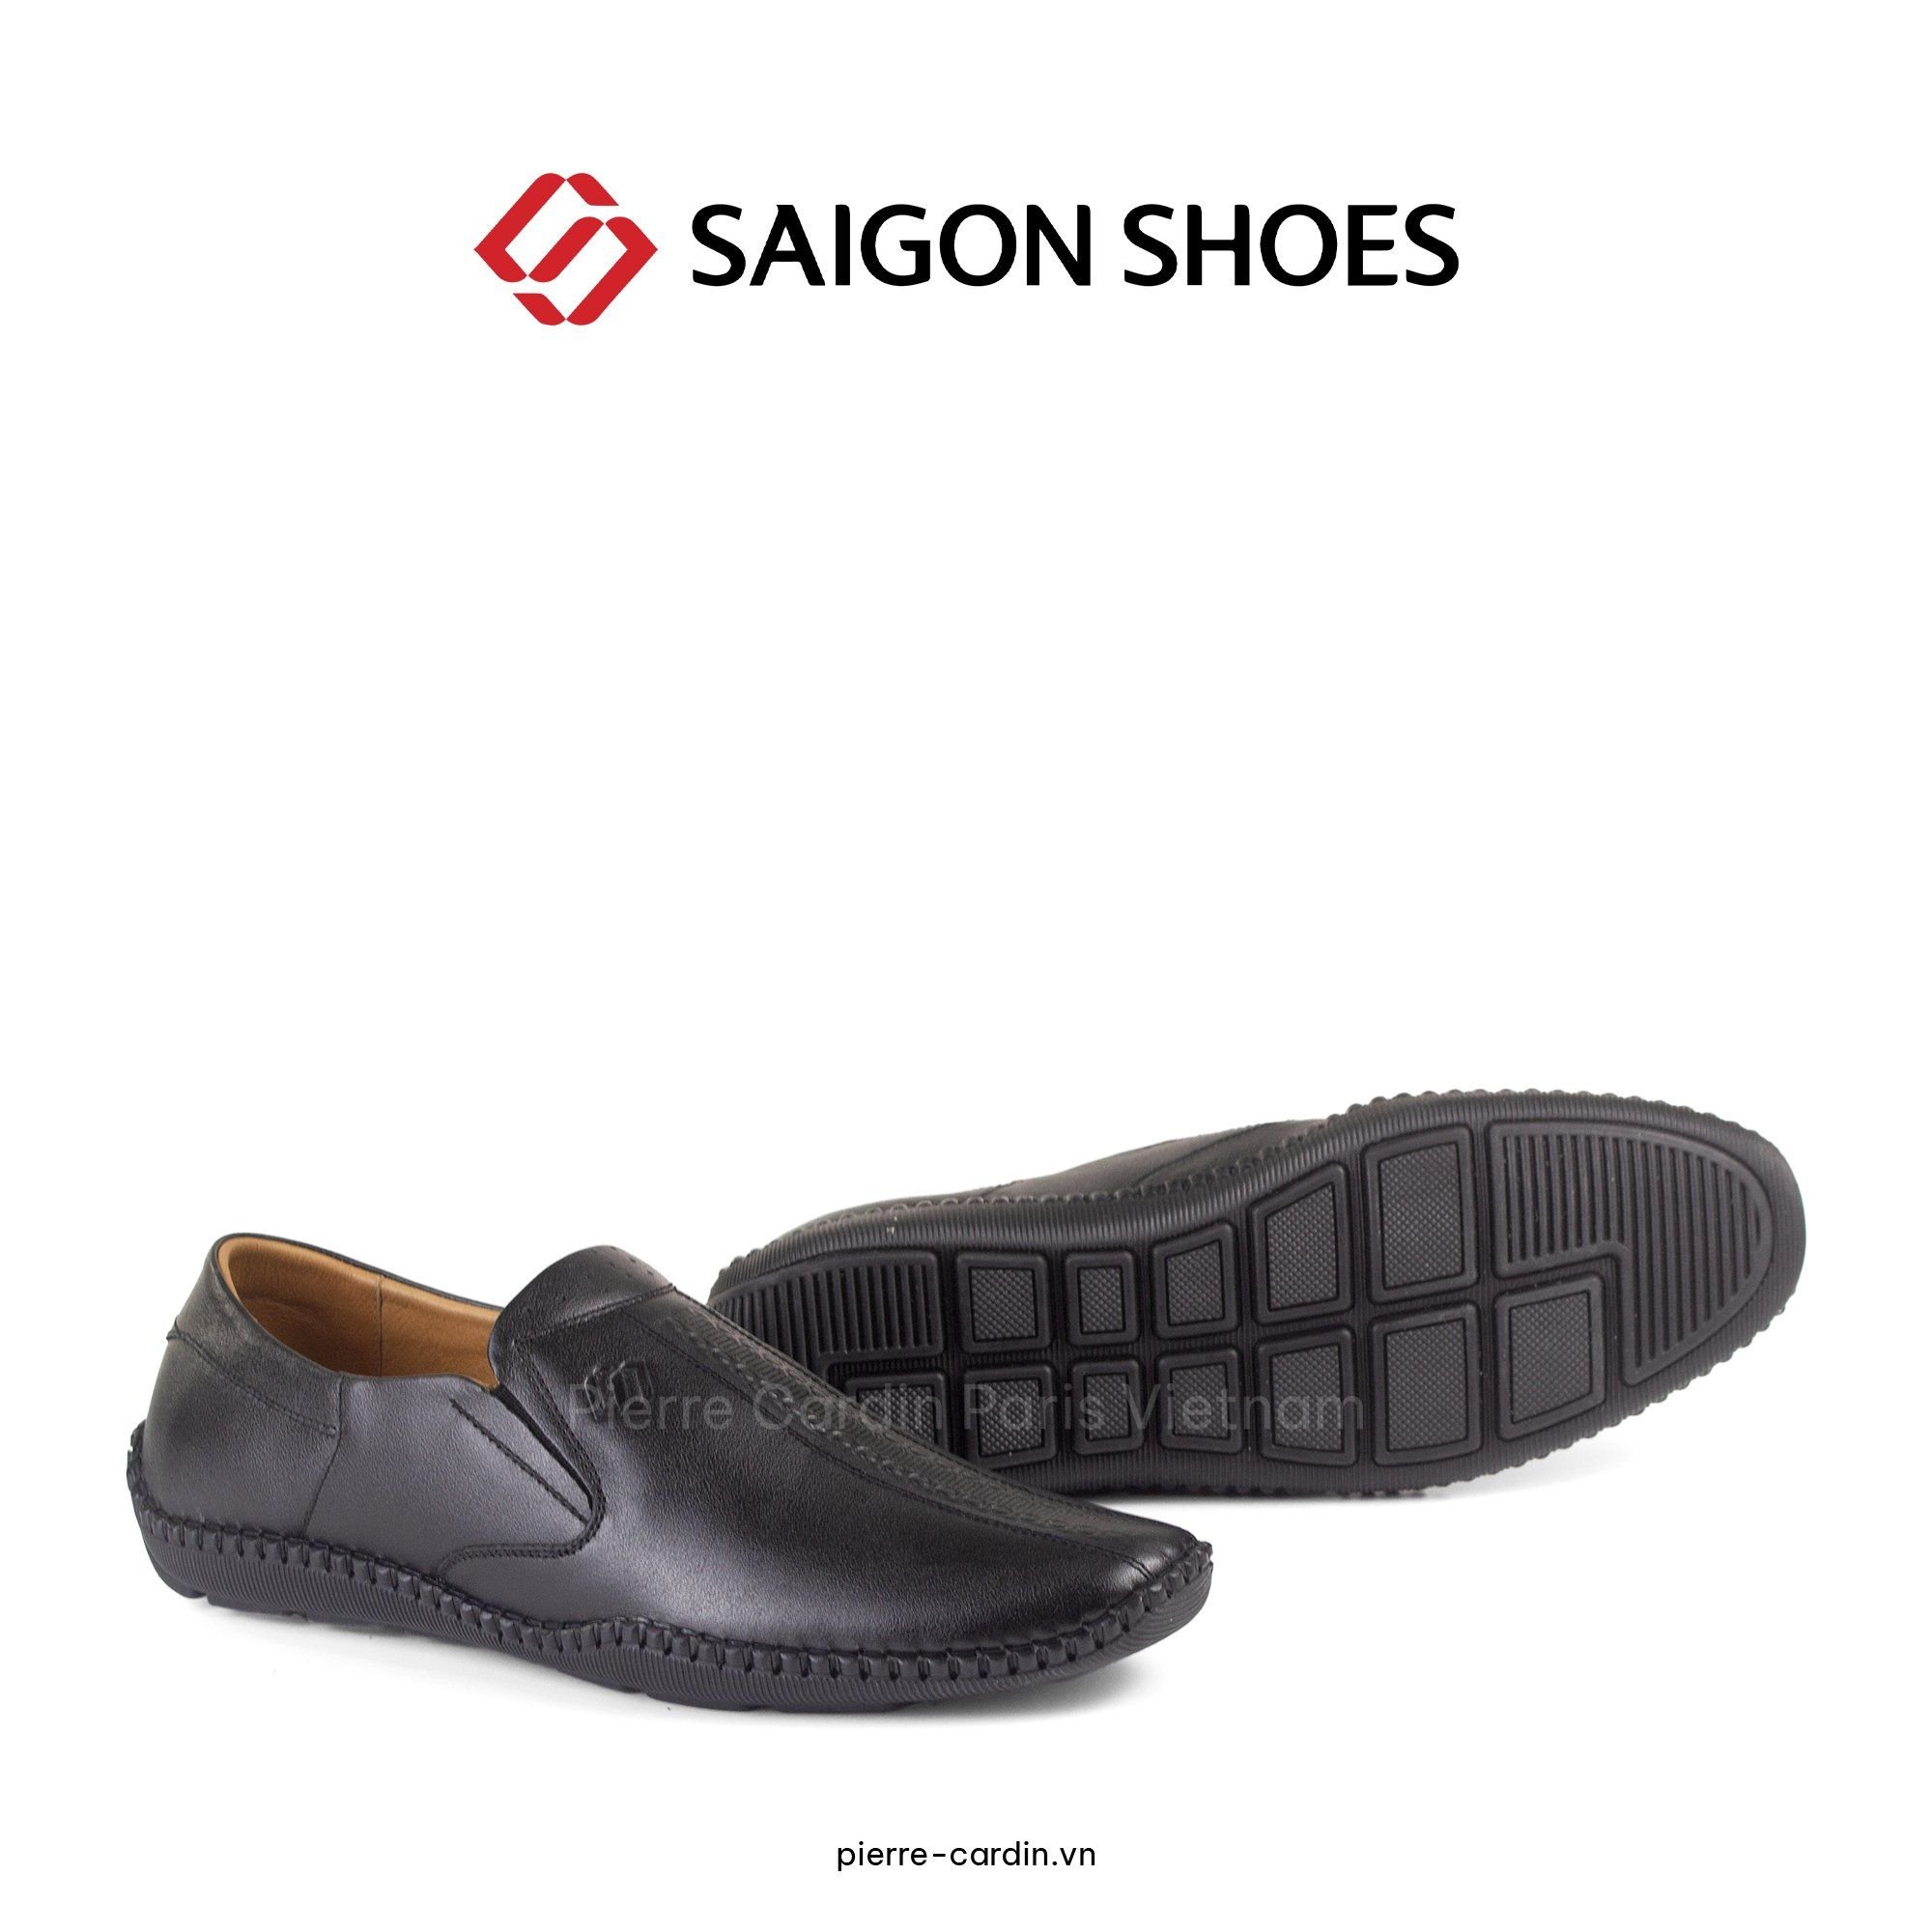 Pierre Cardin Paris Vietnam: Giày Mọi Saigon Shoes - SGMFWLH 001 (BLACK)